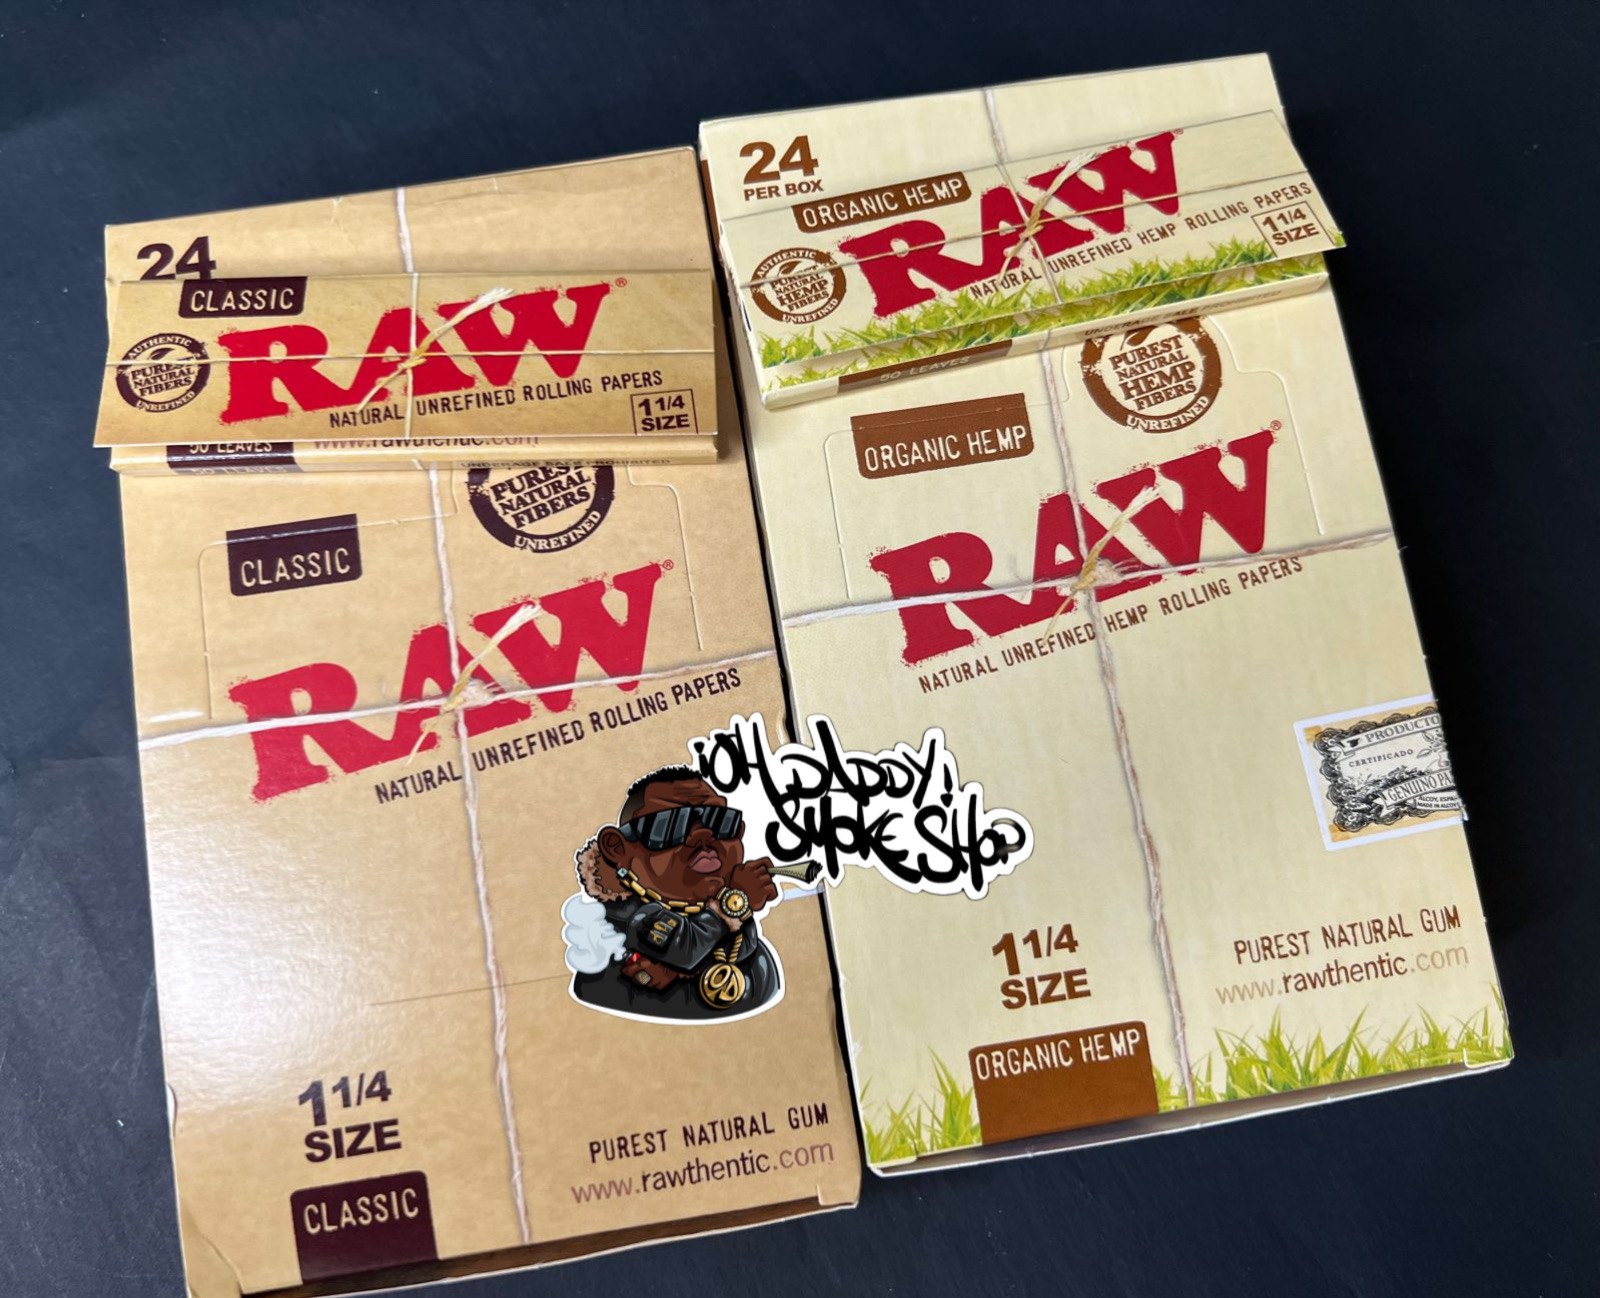 Raw Organic hemp 1 1/4